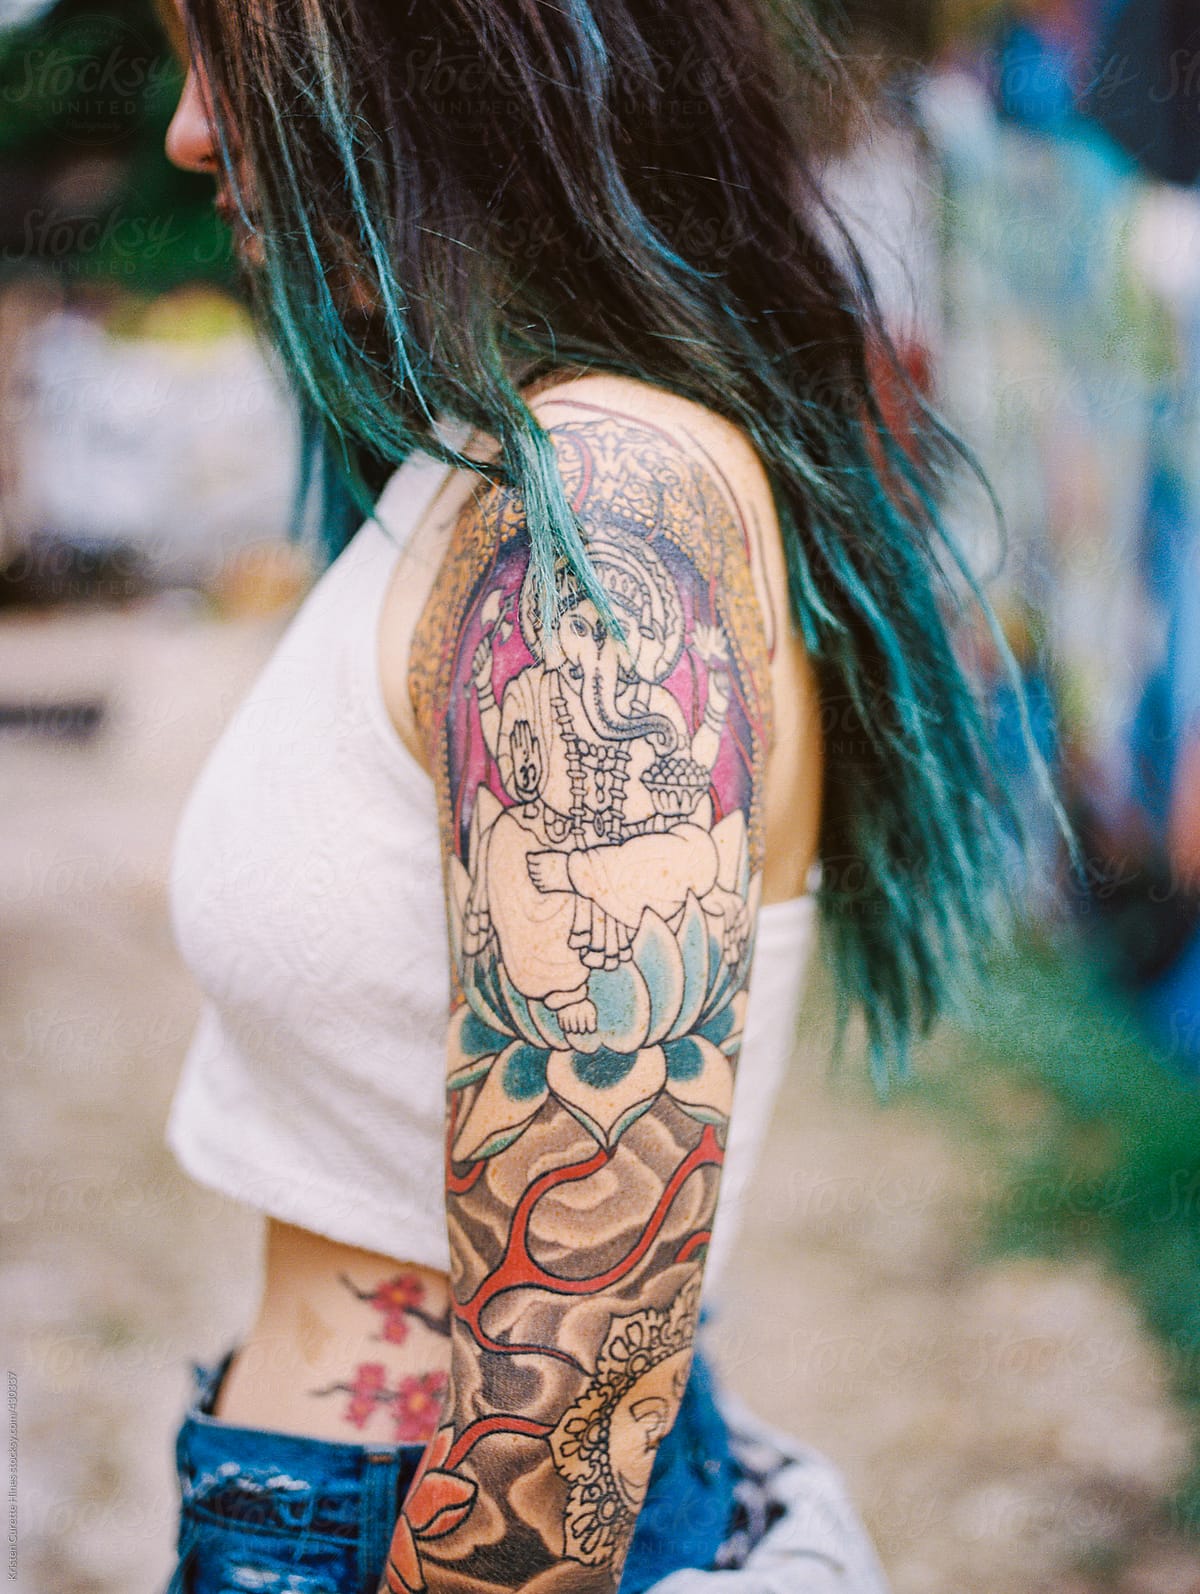 Shoulder Sleeve Tattoo Ganesha - Best Tattoo Ideas Gallery